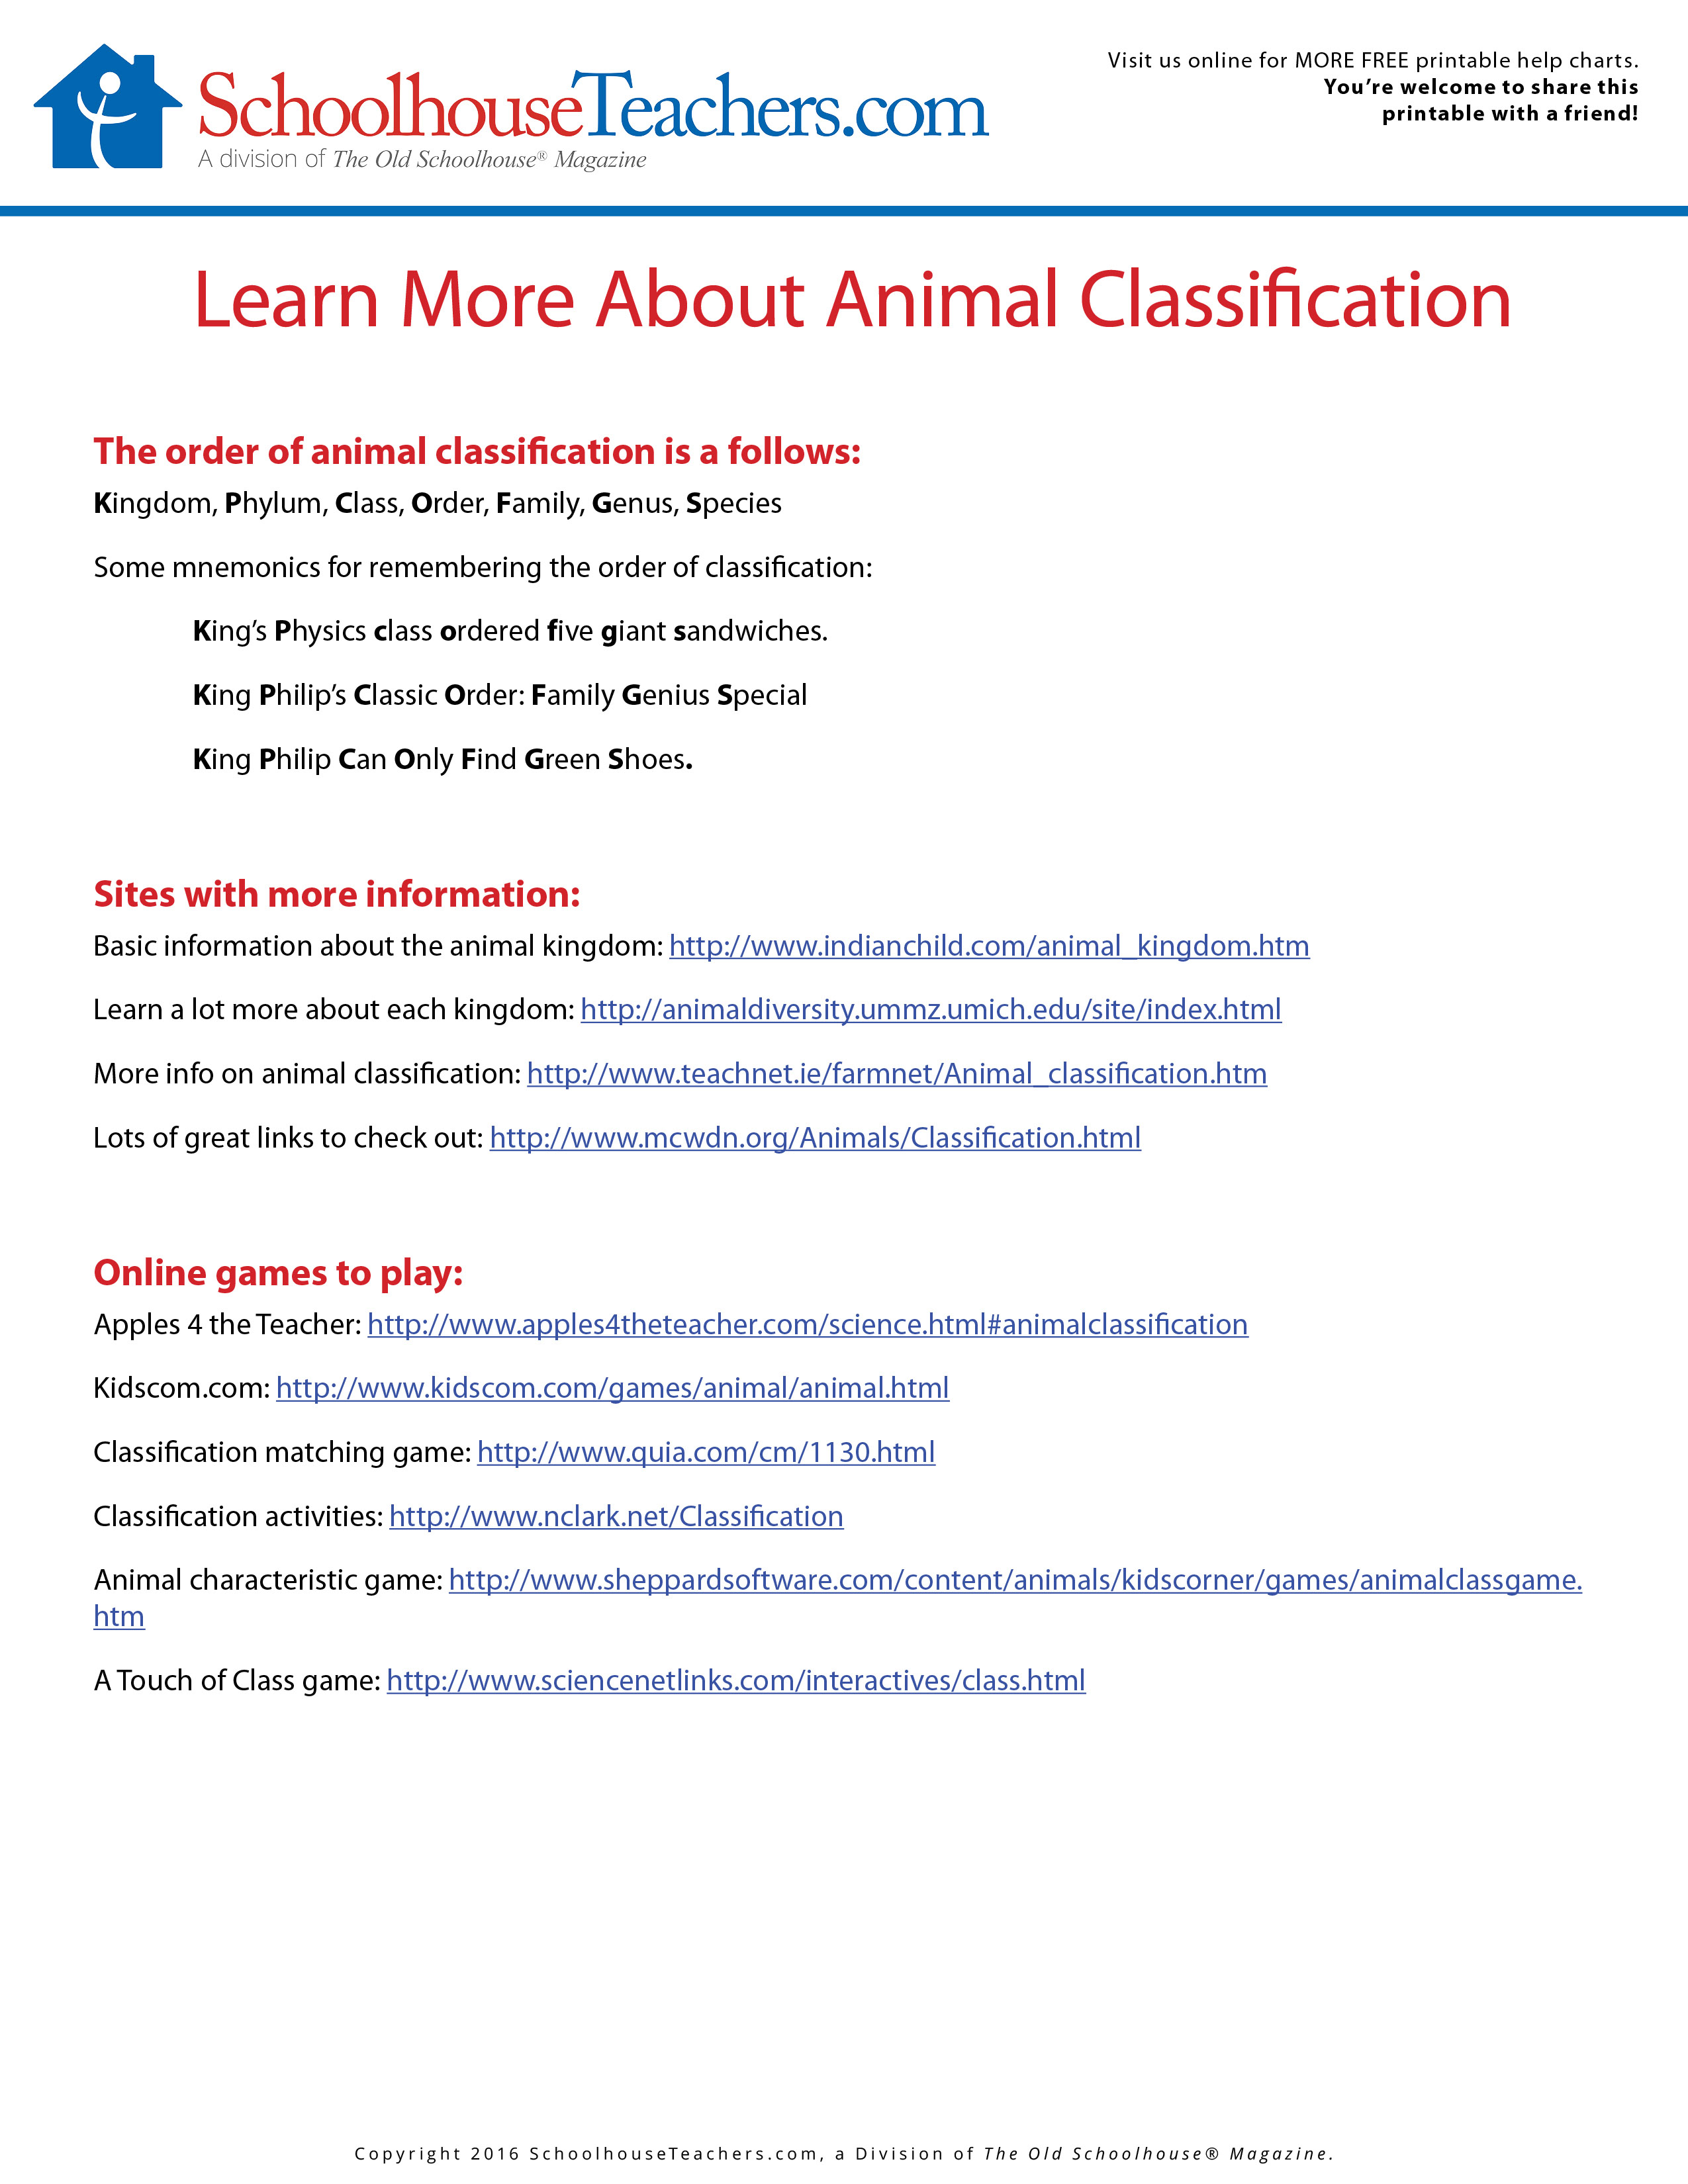 Printable Nature Journal and Animal Classification List